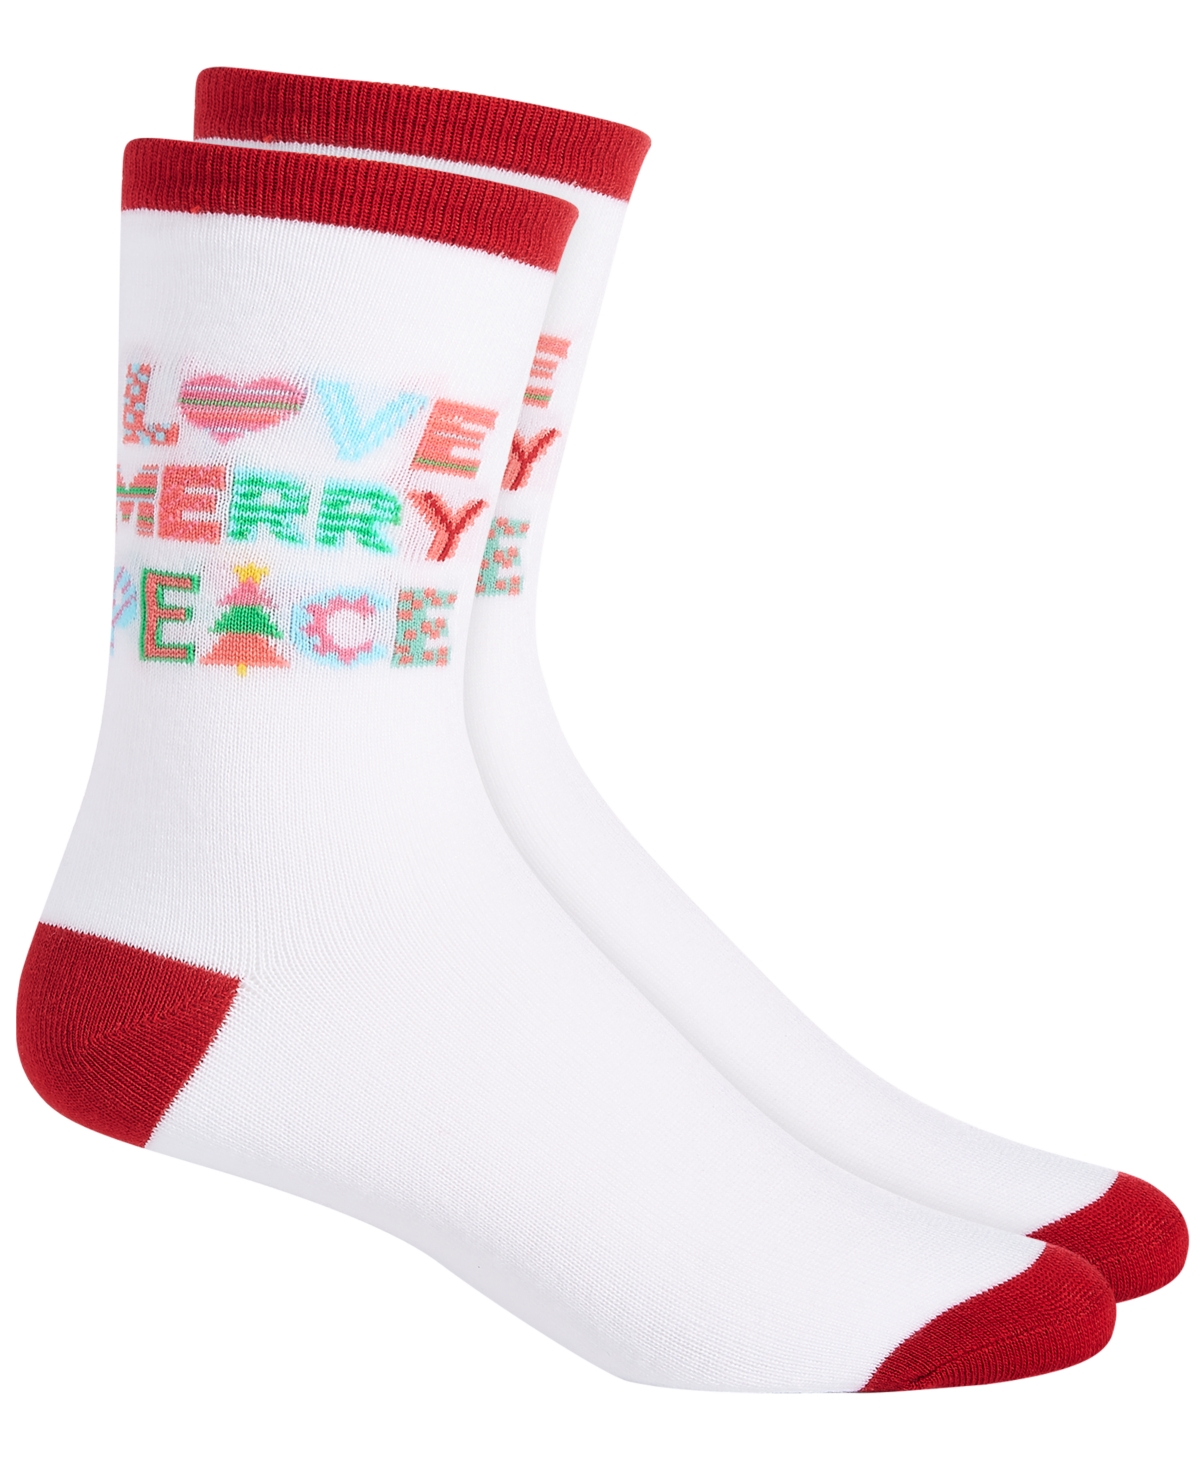 Holiday Crew Socks, Created for Macy's - Wine